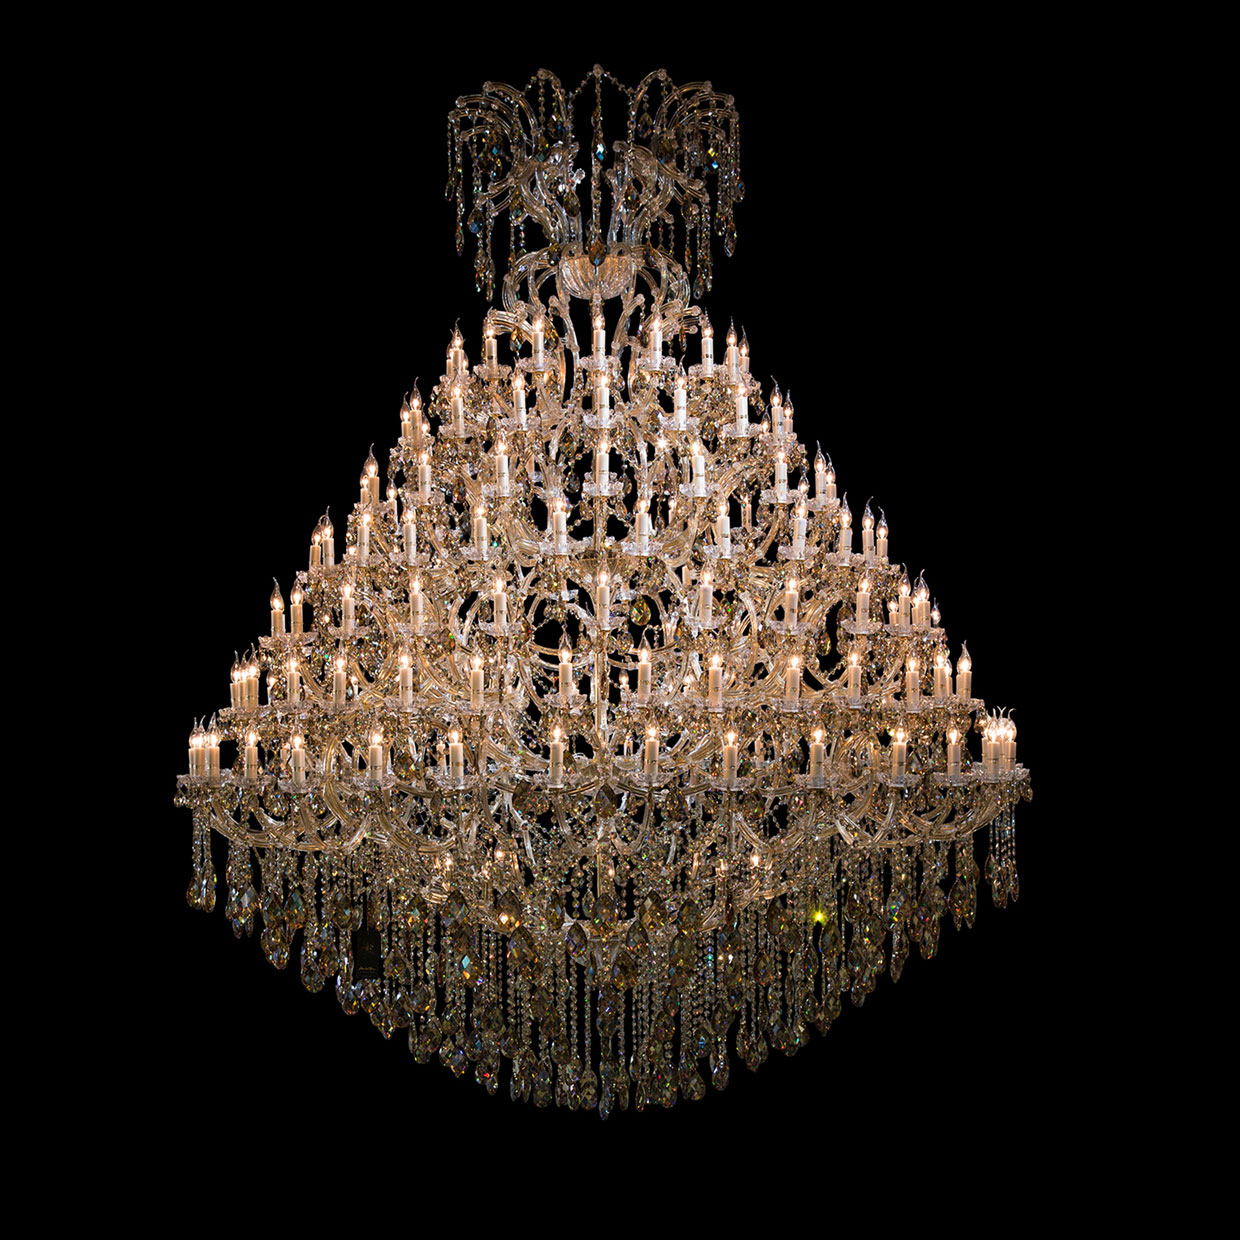 176 Lights Huge Crystal Chandelier Big Maria Theresa Chandelier for Wedding Hall